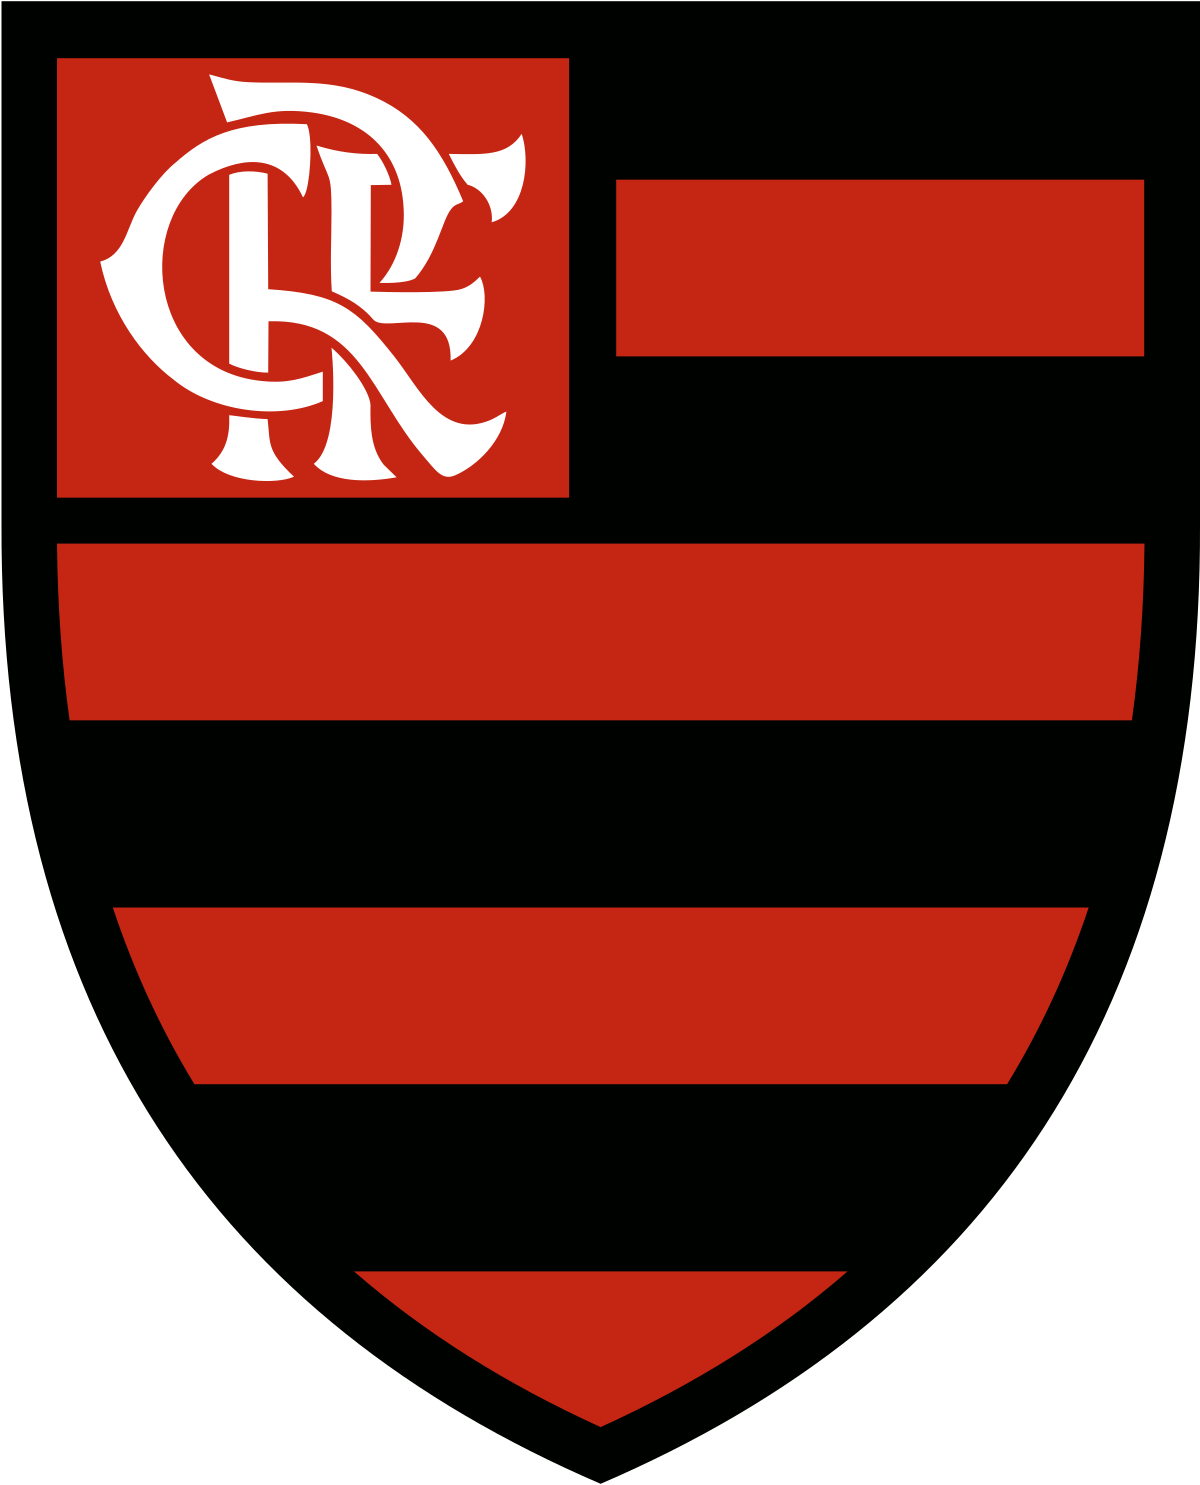 CR FLAMENGO RJ Logo